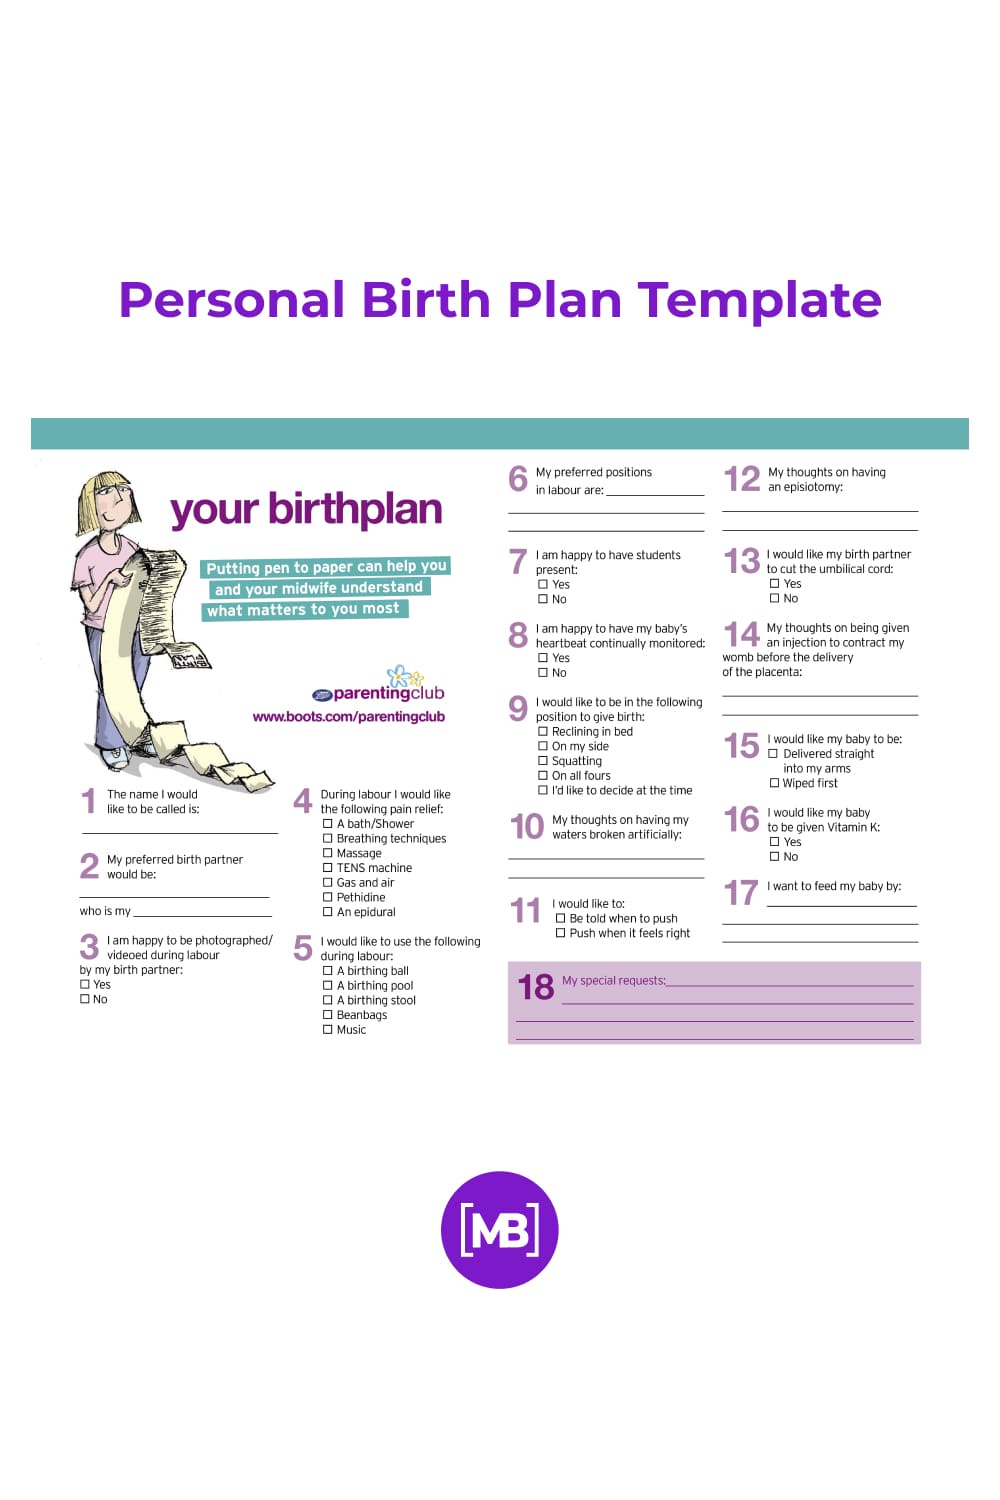 Personal birth plan template.